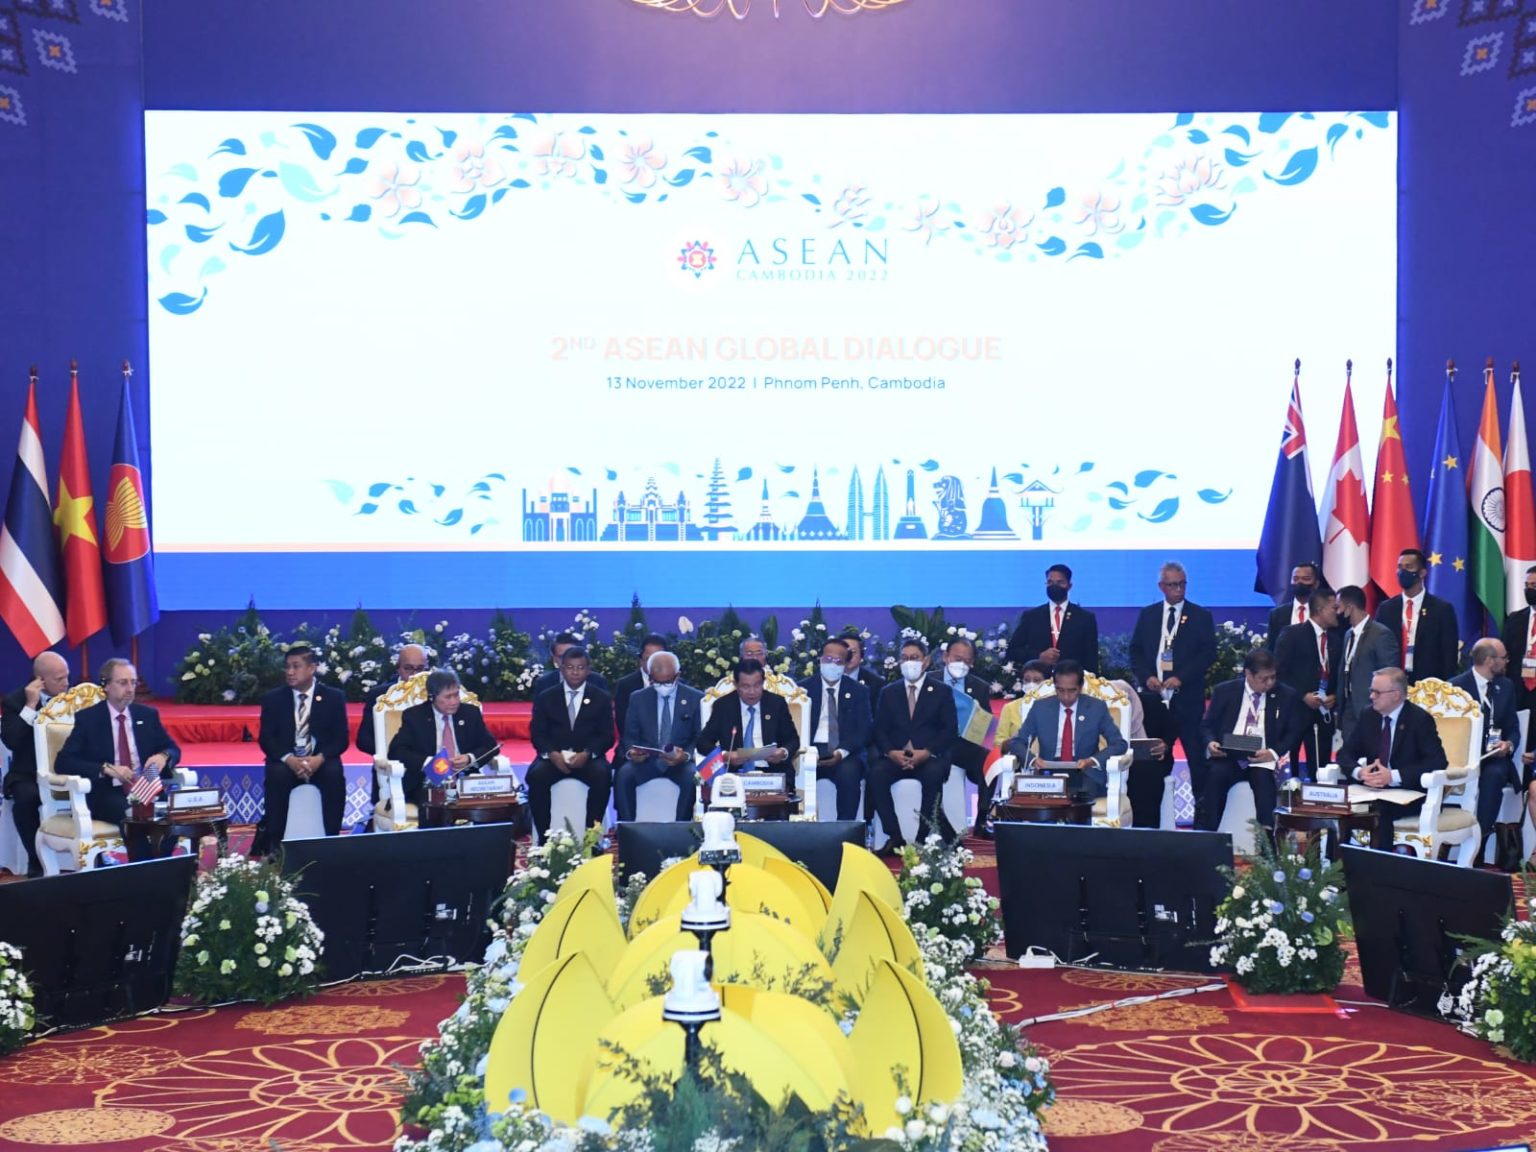 Presiden Jokowi Paparkan 3 Fokus Utama ASEAN Hadapi Tantangan Ekonomi